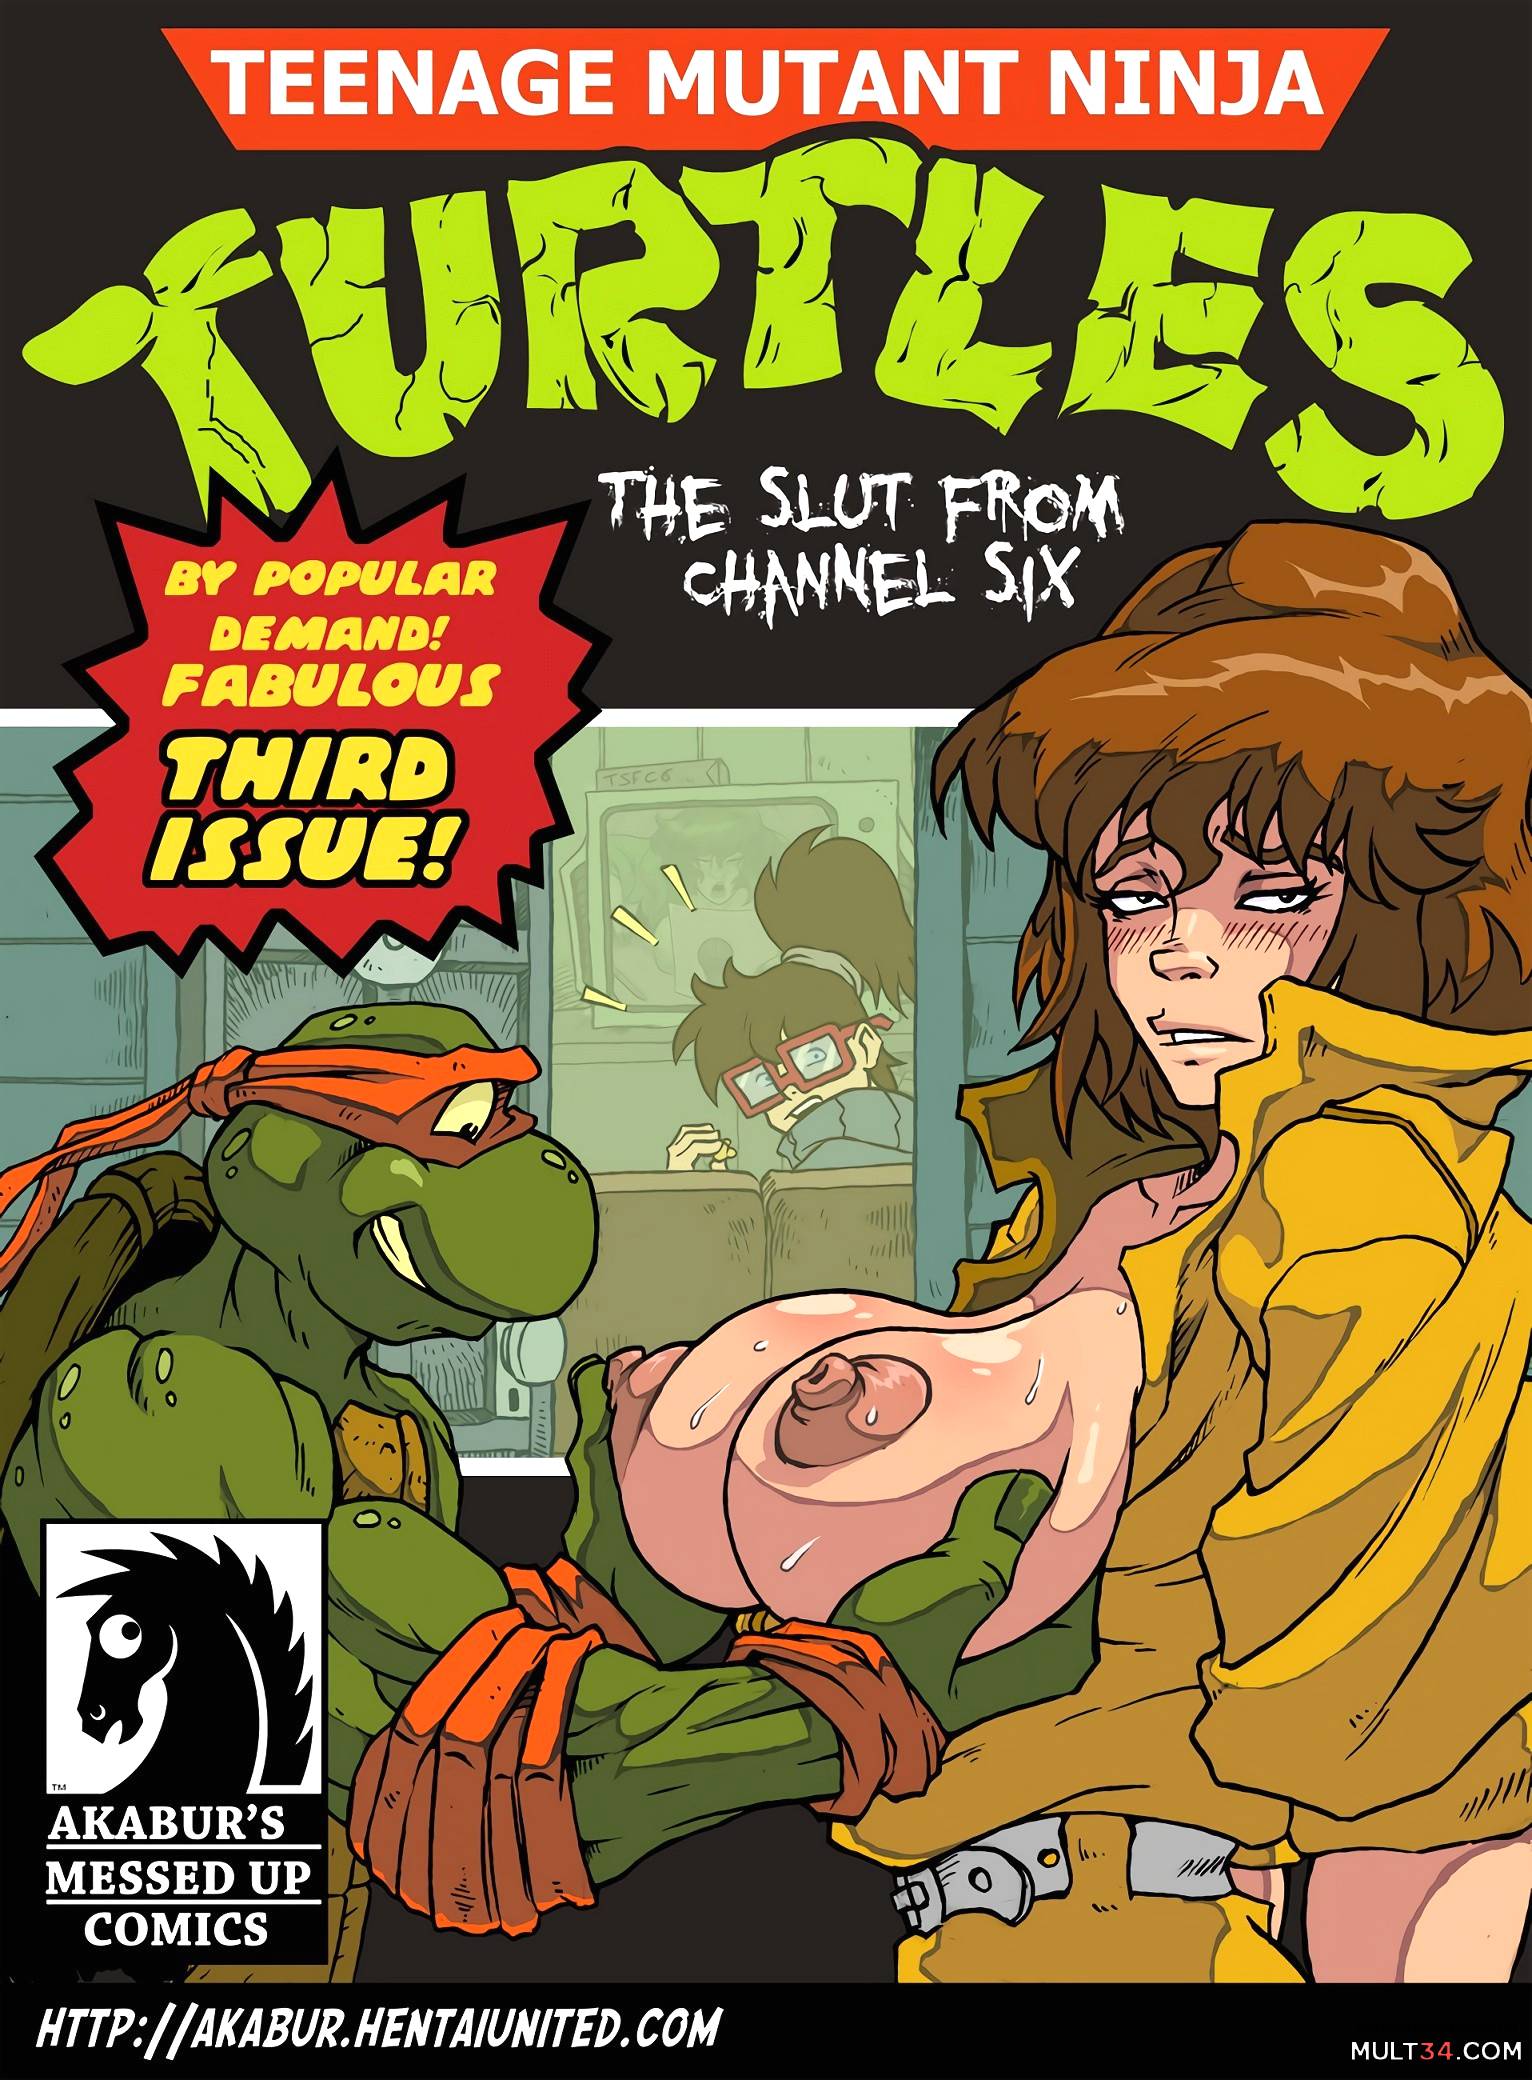 Hd teen age mutant ninja turtles porn comics